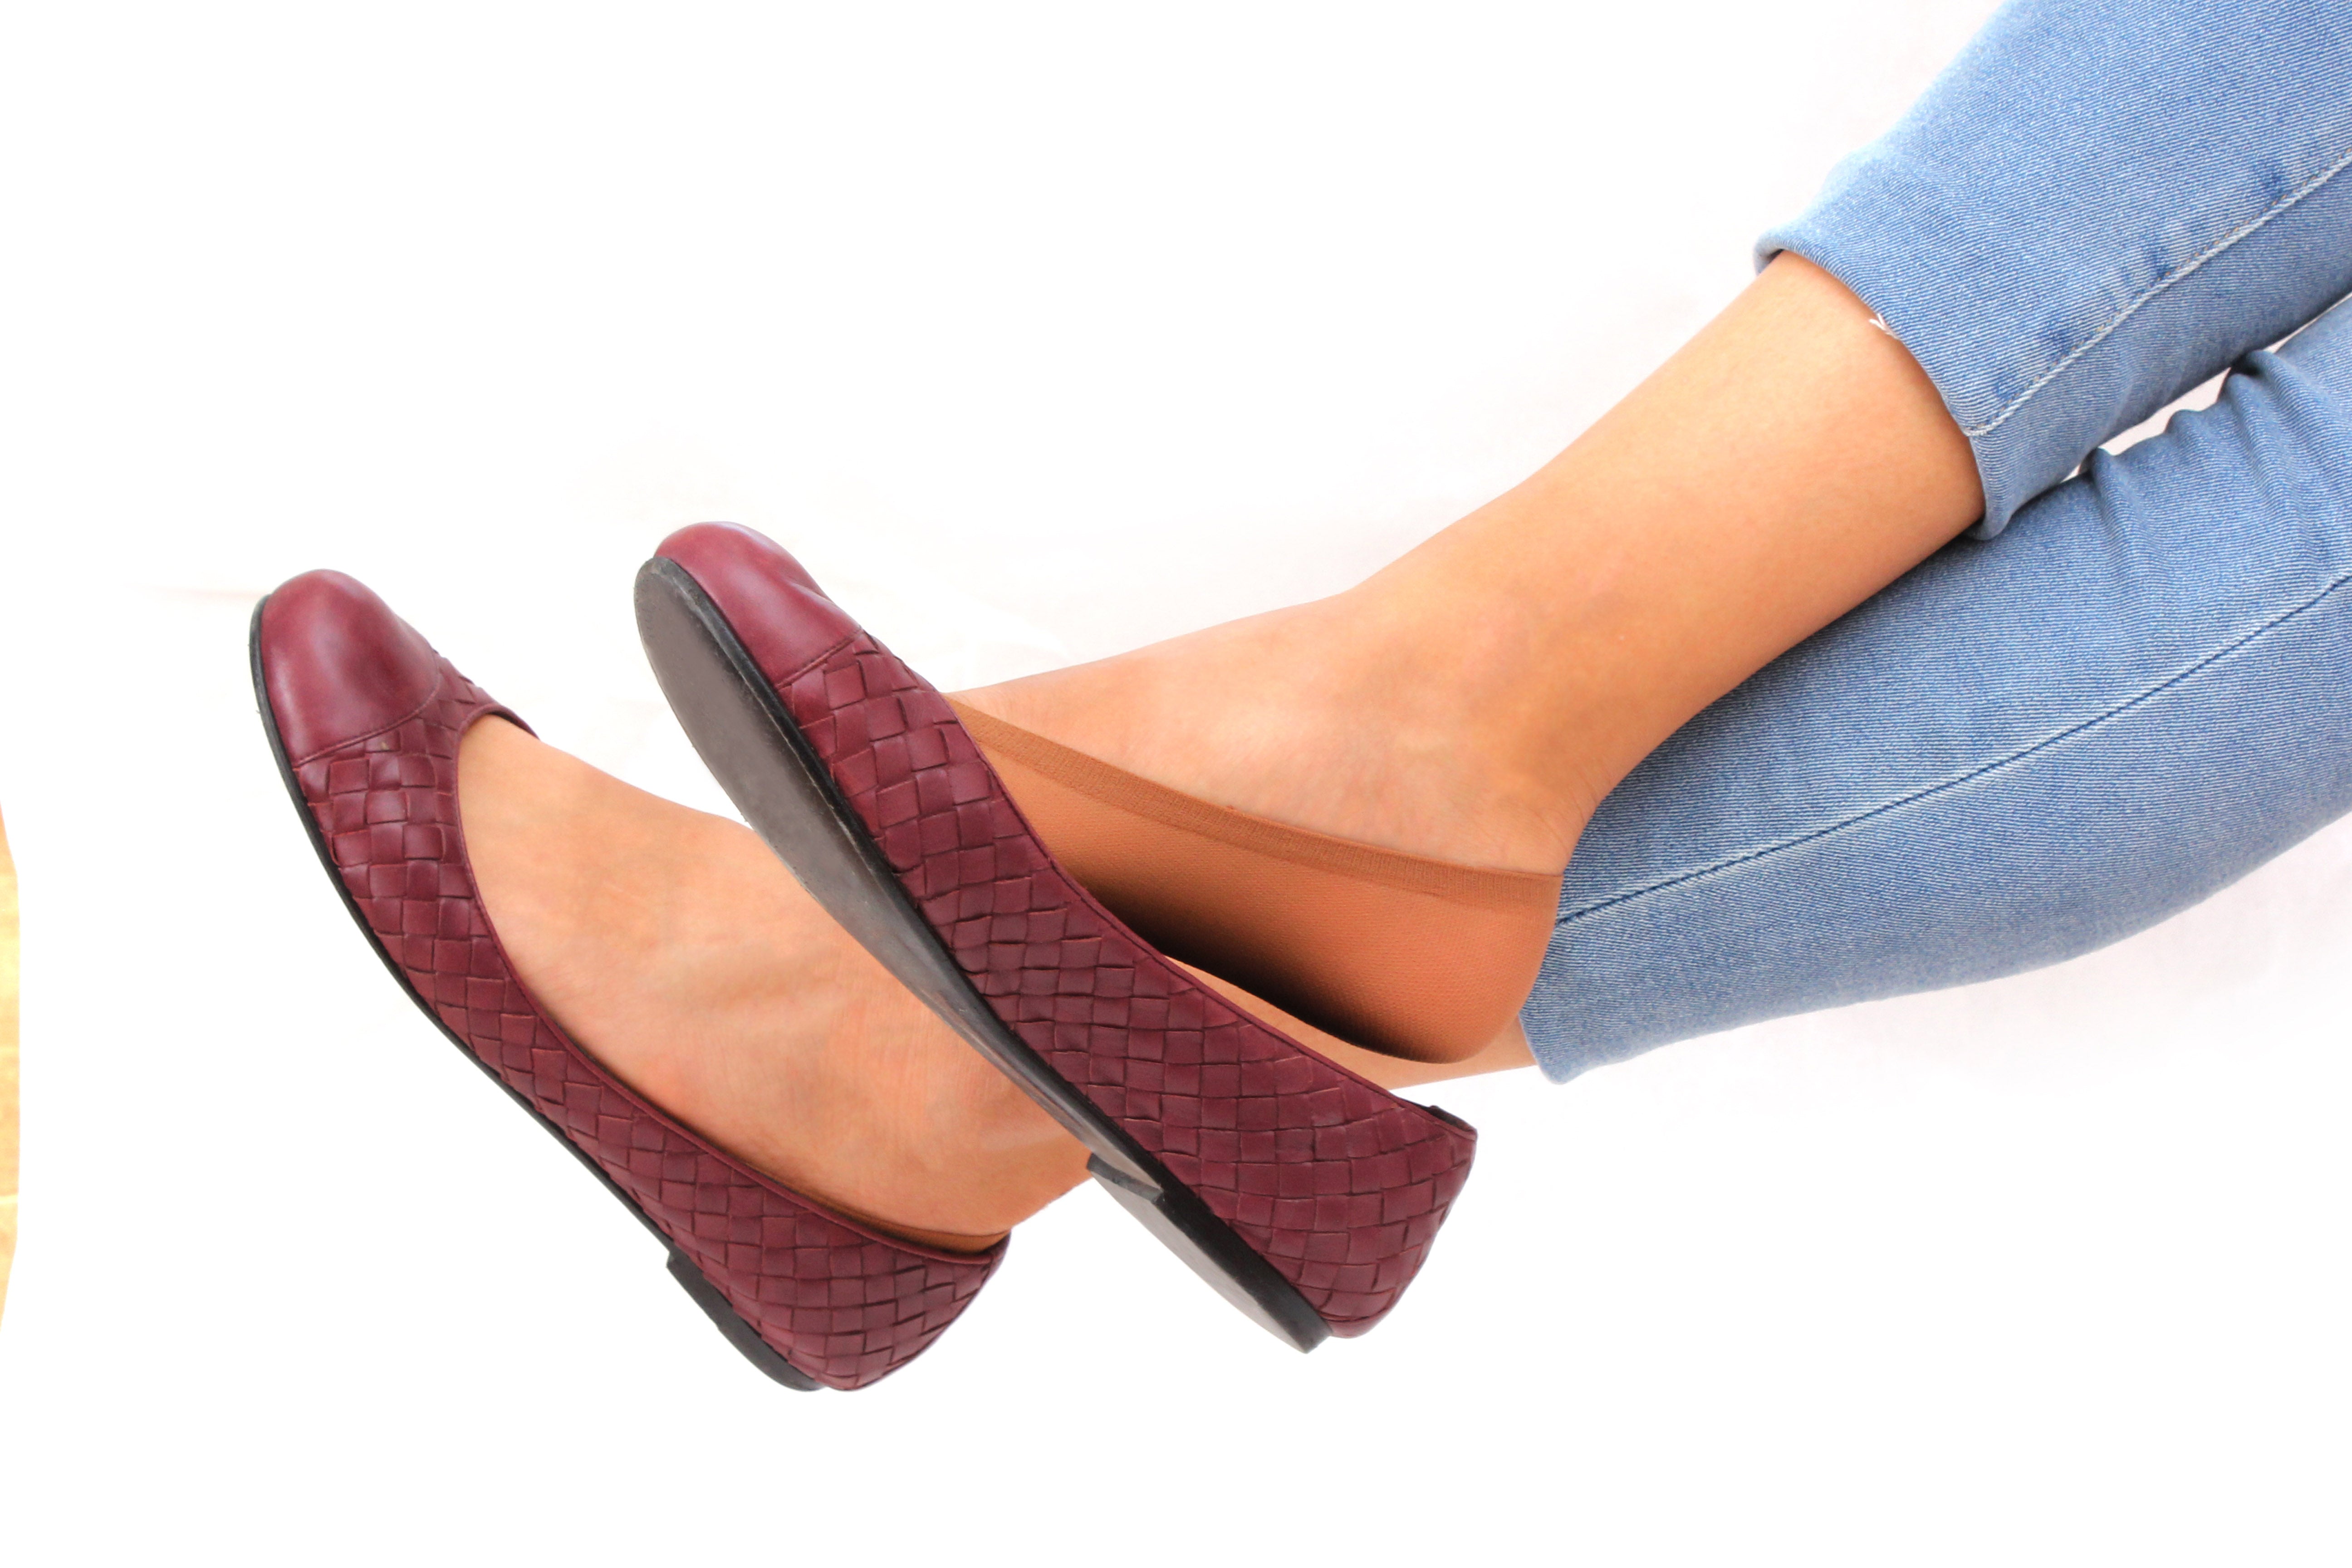 Women's Low Cut Ankle Sheer Socks, Pack of 2 Pairs